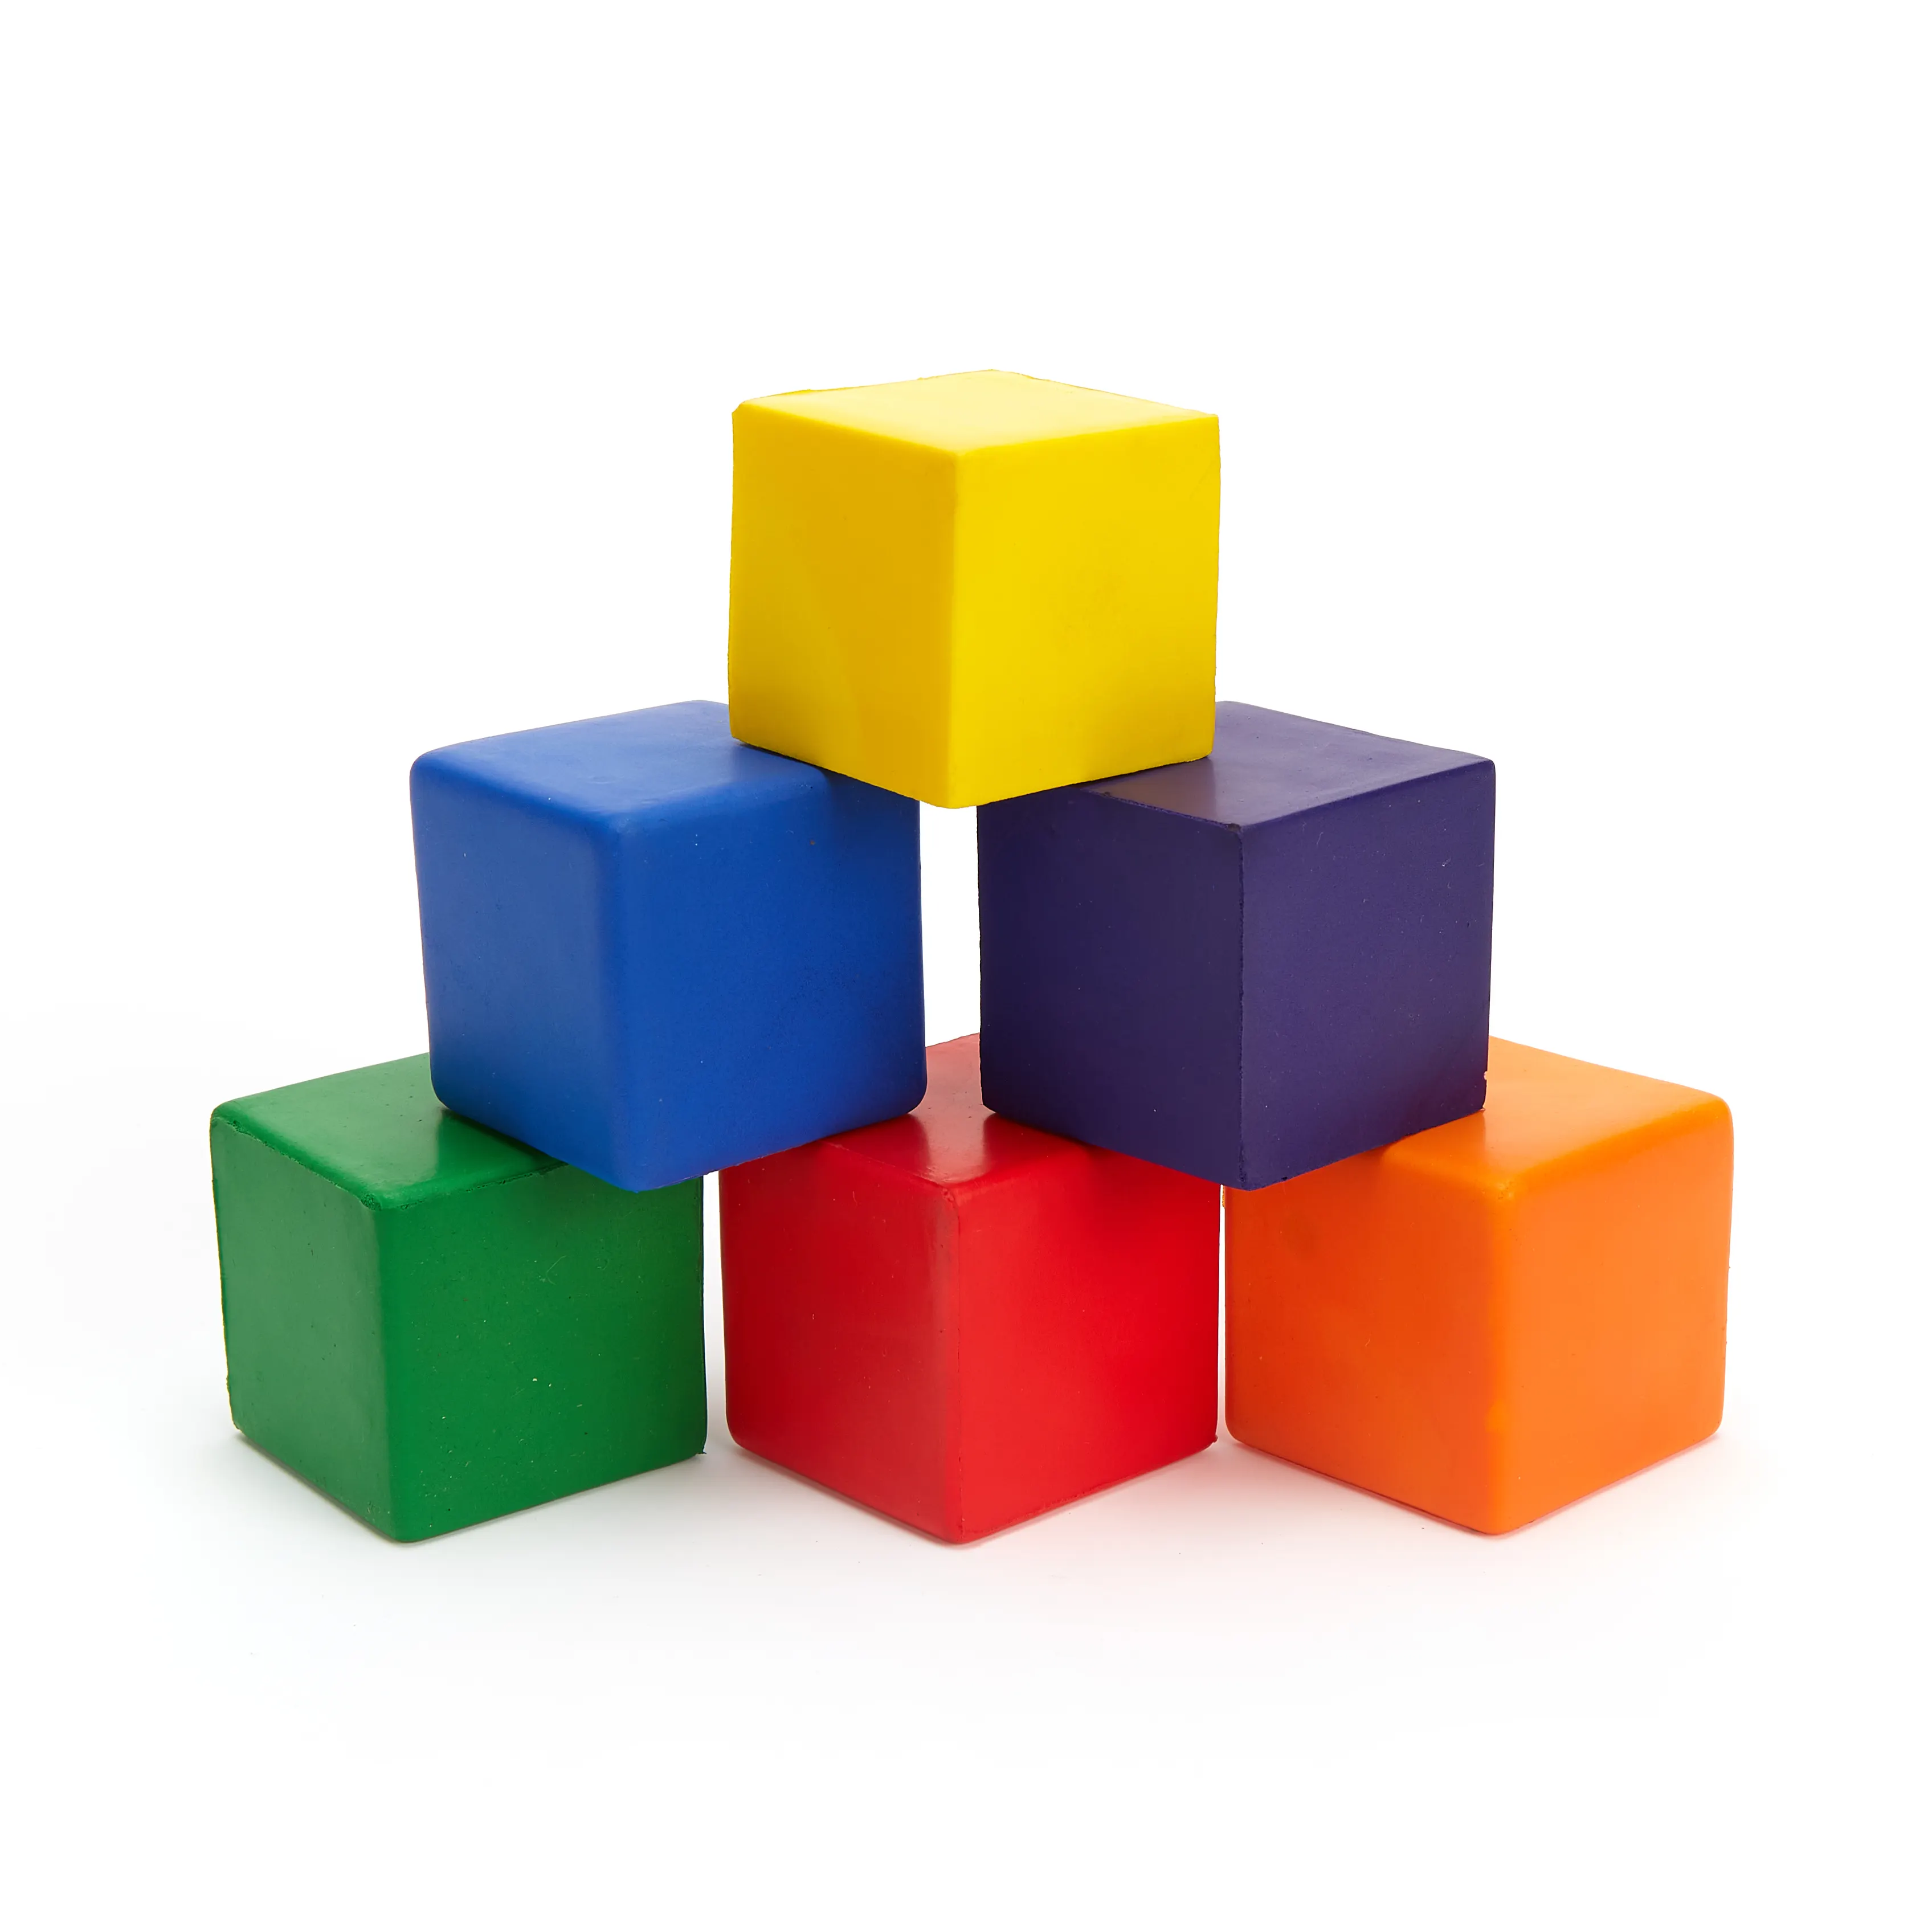 2021 Hot Products Colorful & High Density Child's Soft Foam Rectangular Cube Blocks Anti Stress Toys PU Toy Stress Ball En71,ce